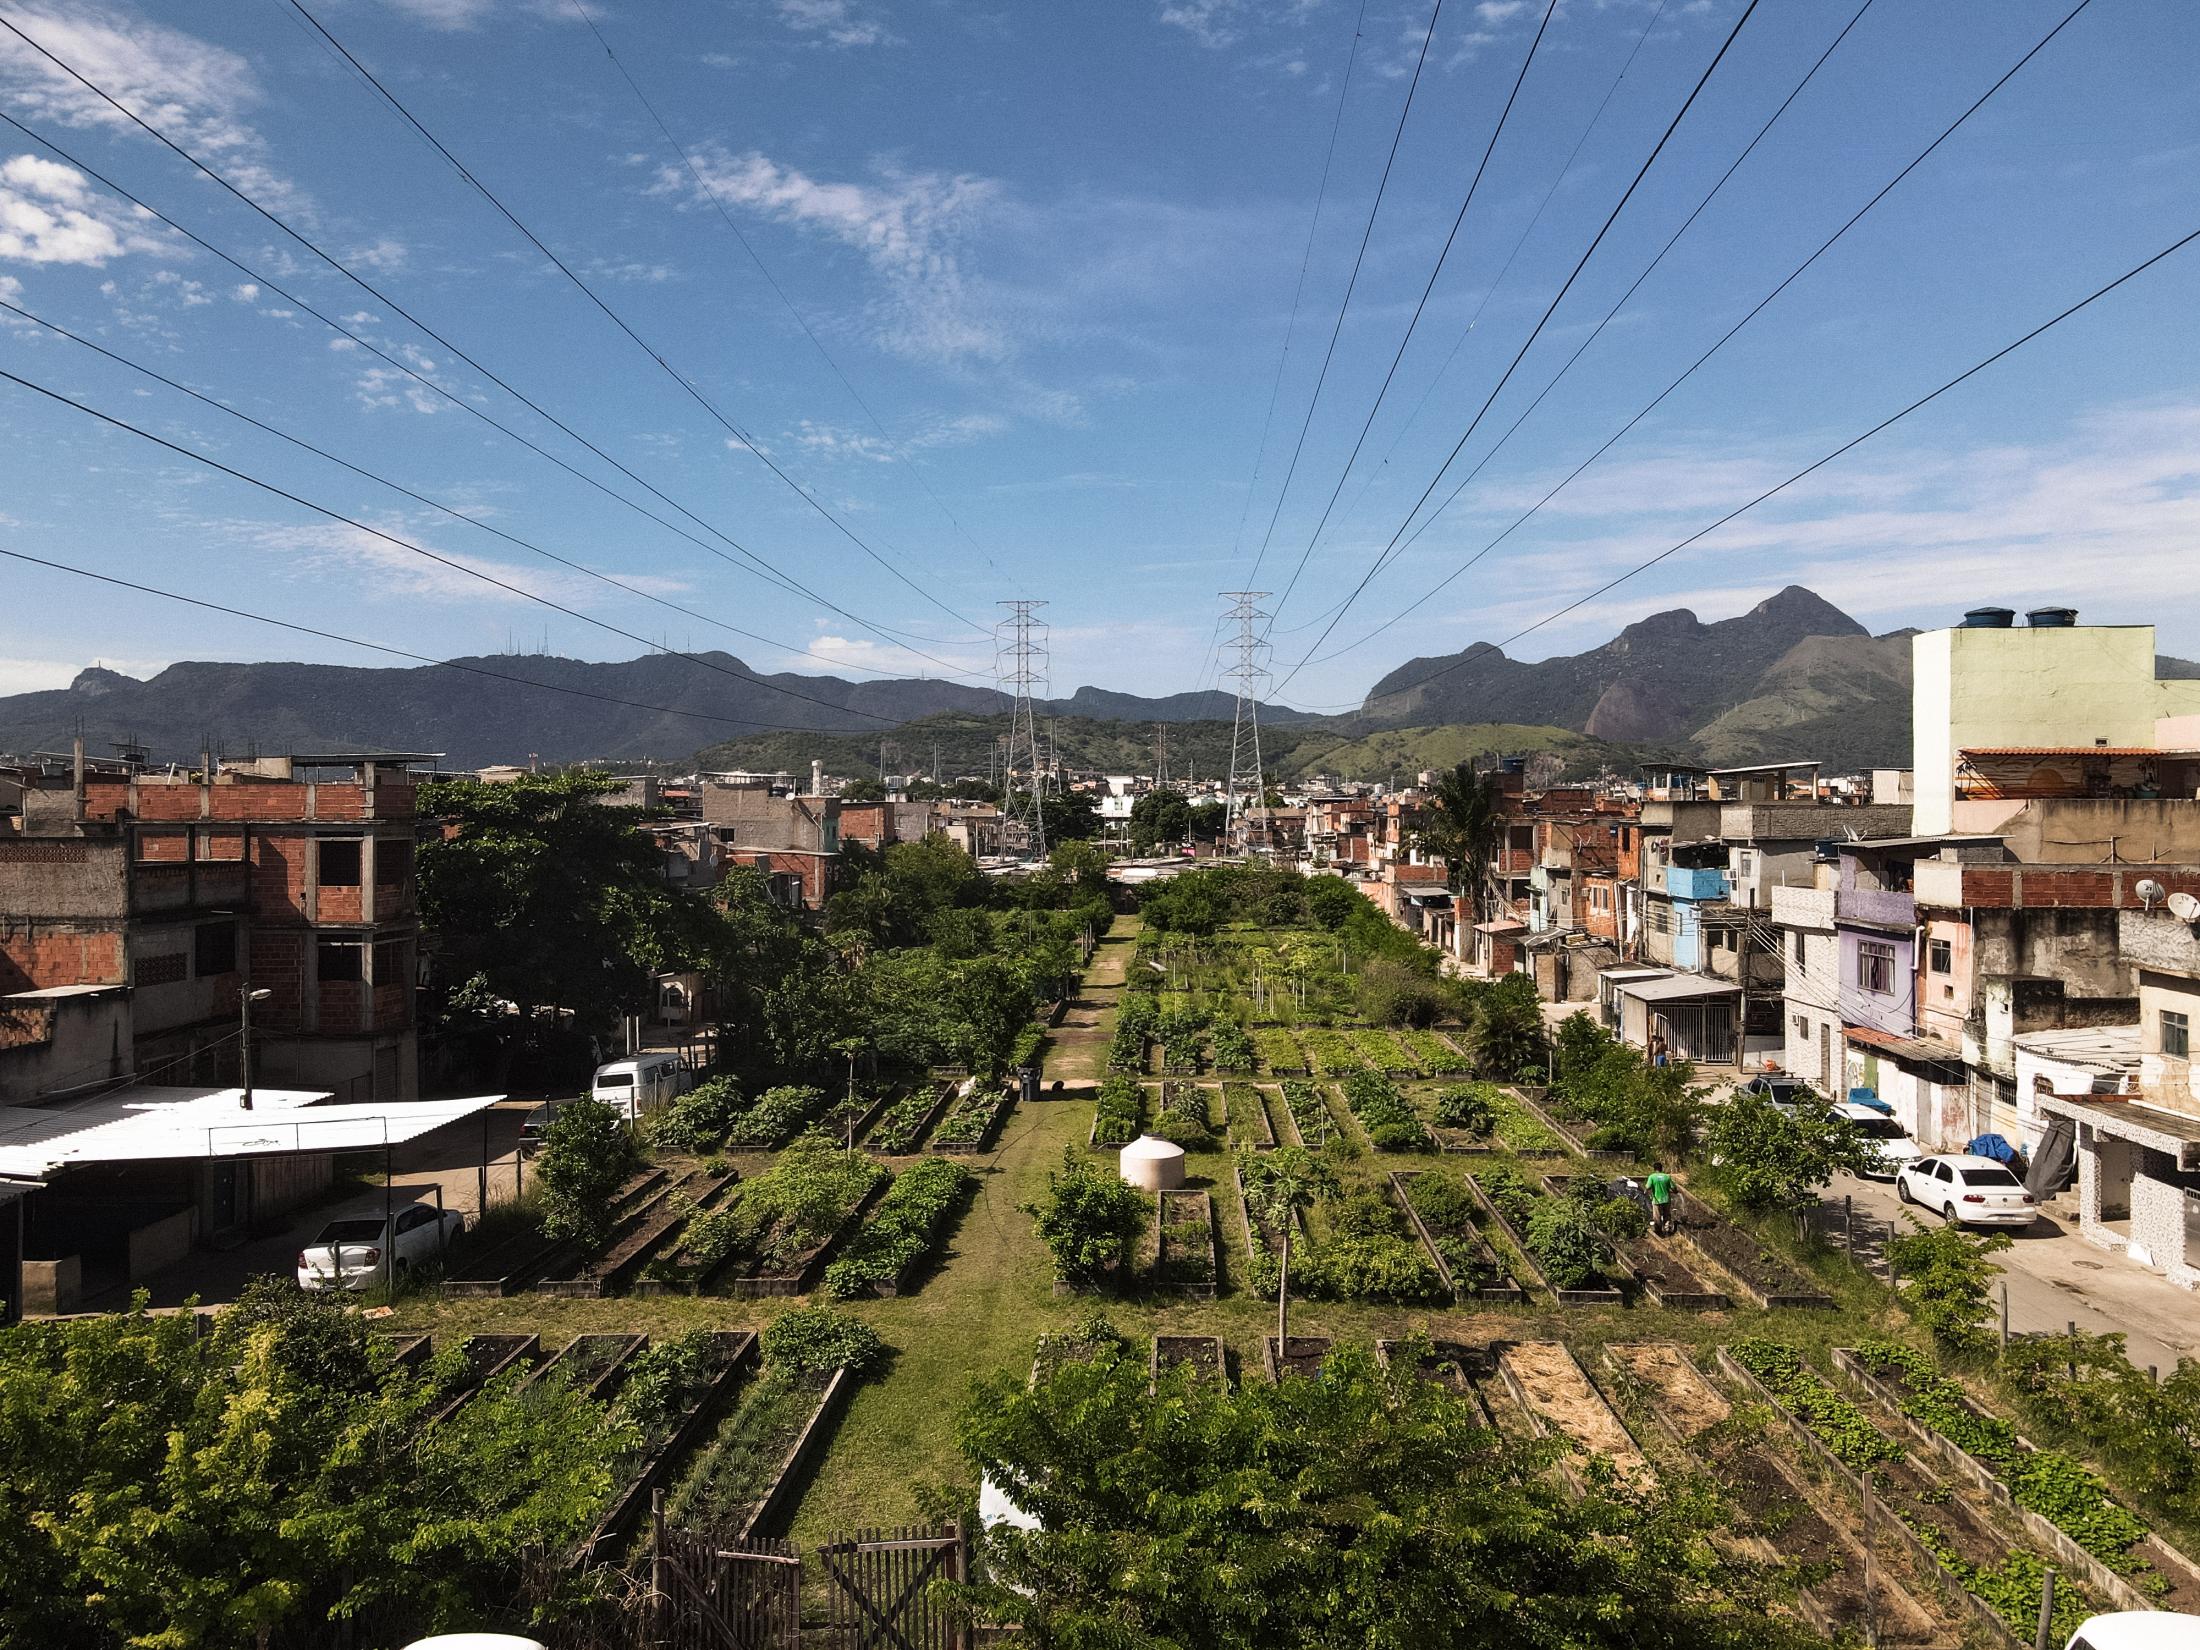 Urban farming in Brazil's favelas: this garden saves lives - default